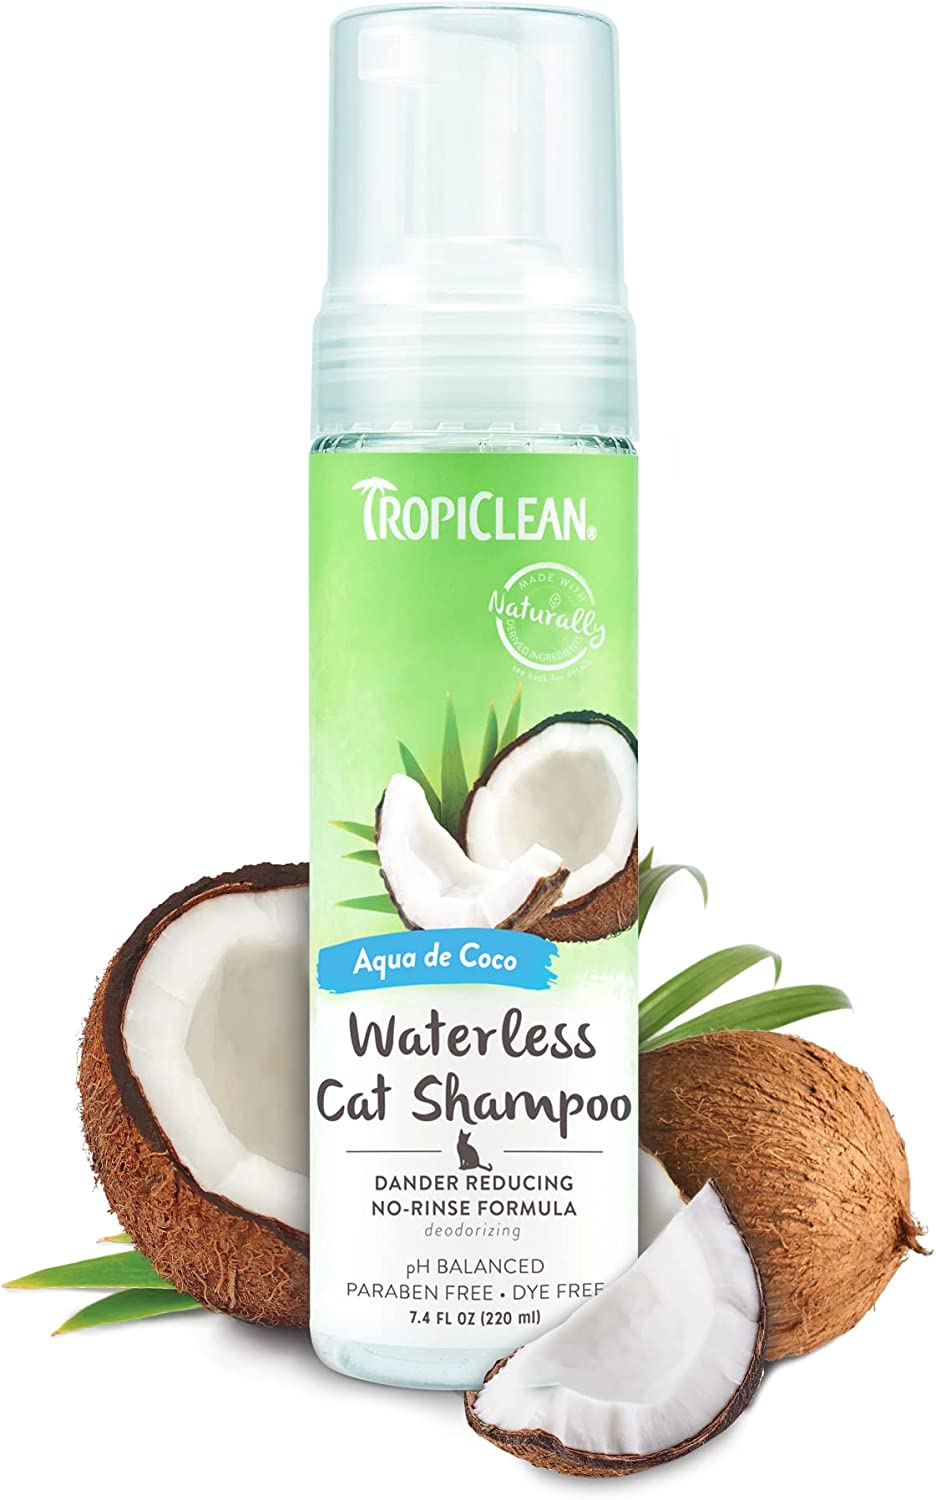 Tropiclean Waterless Cat Shampoo